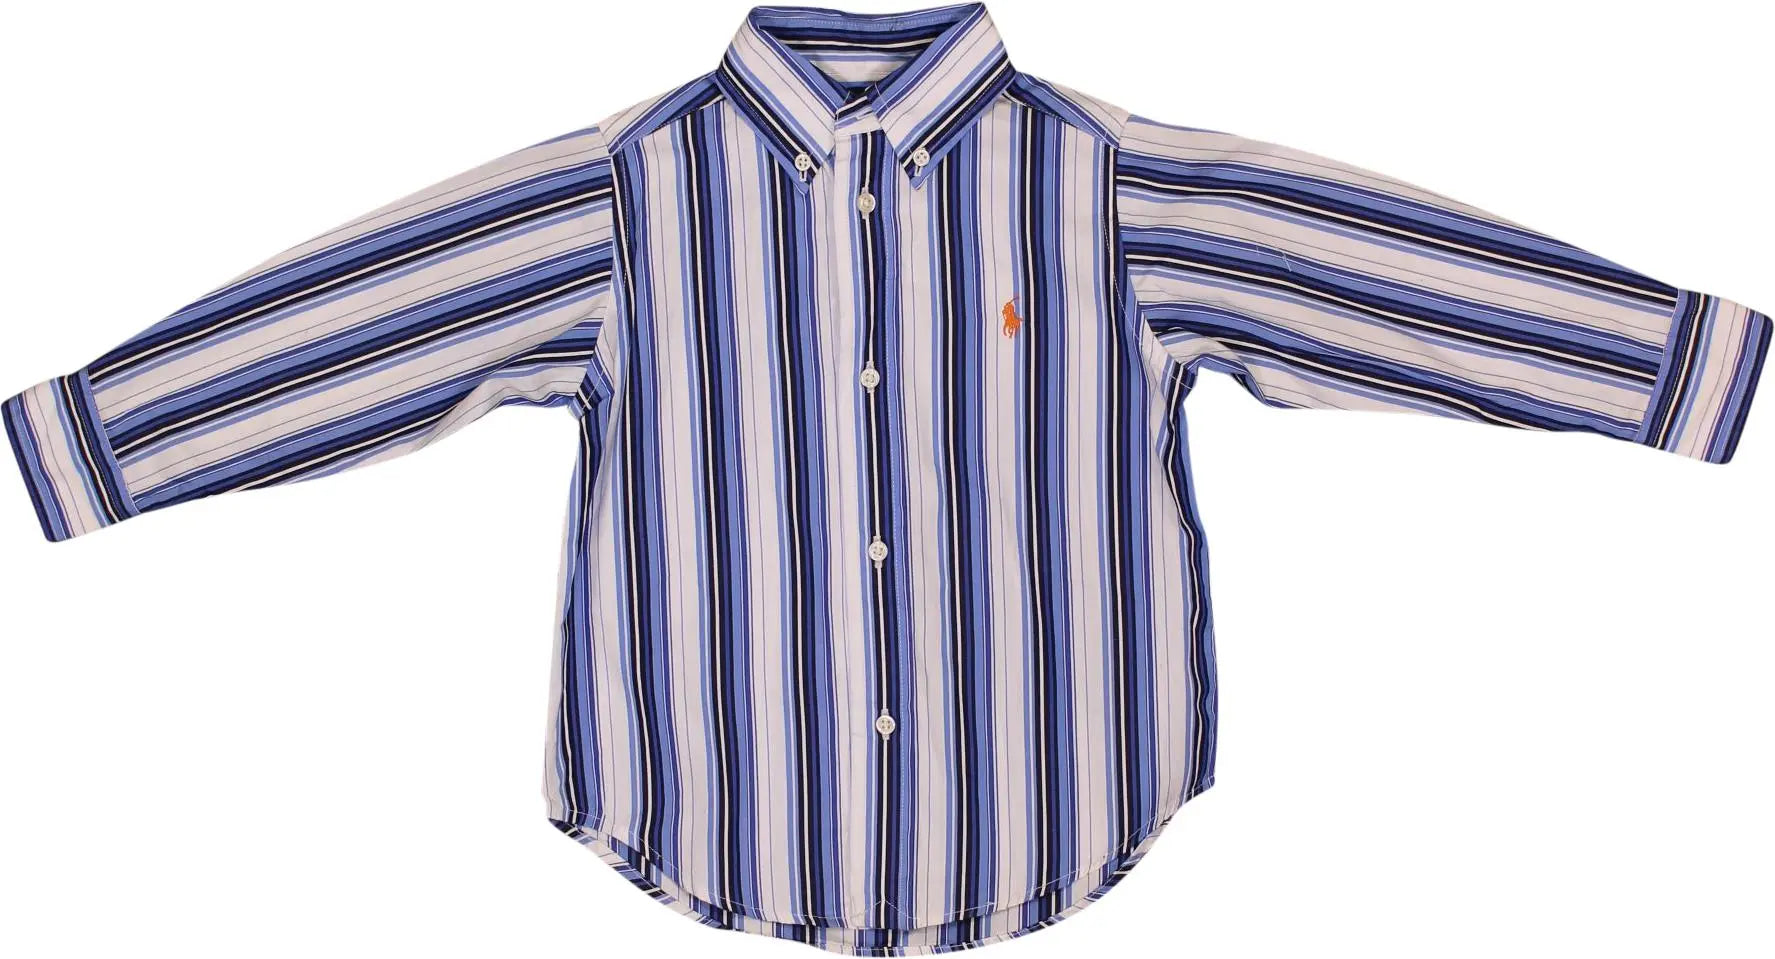 Ralph Lauren - Striped Shirt by Ralph Lauren- ThriftTale.com - Vintage and second handclothing